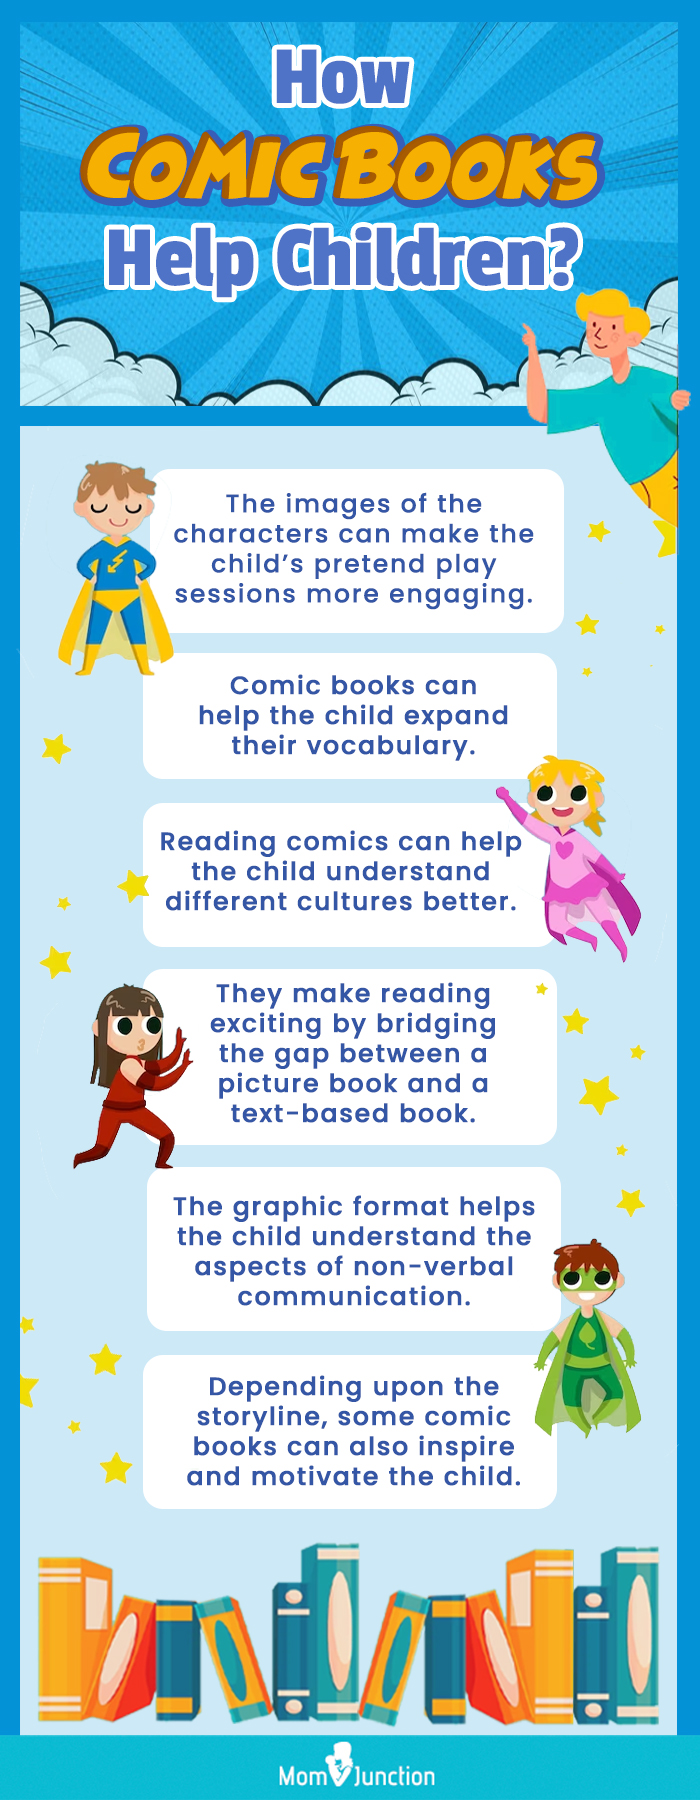 How Comic Books Help Children